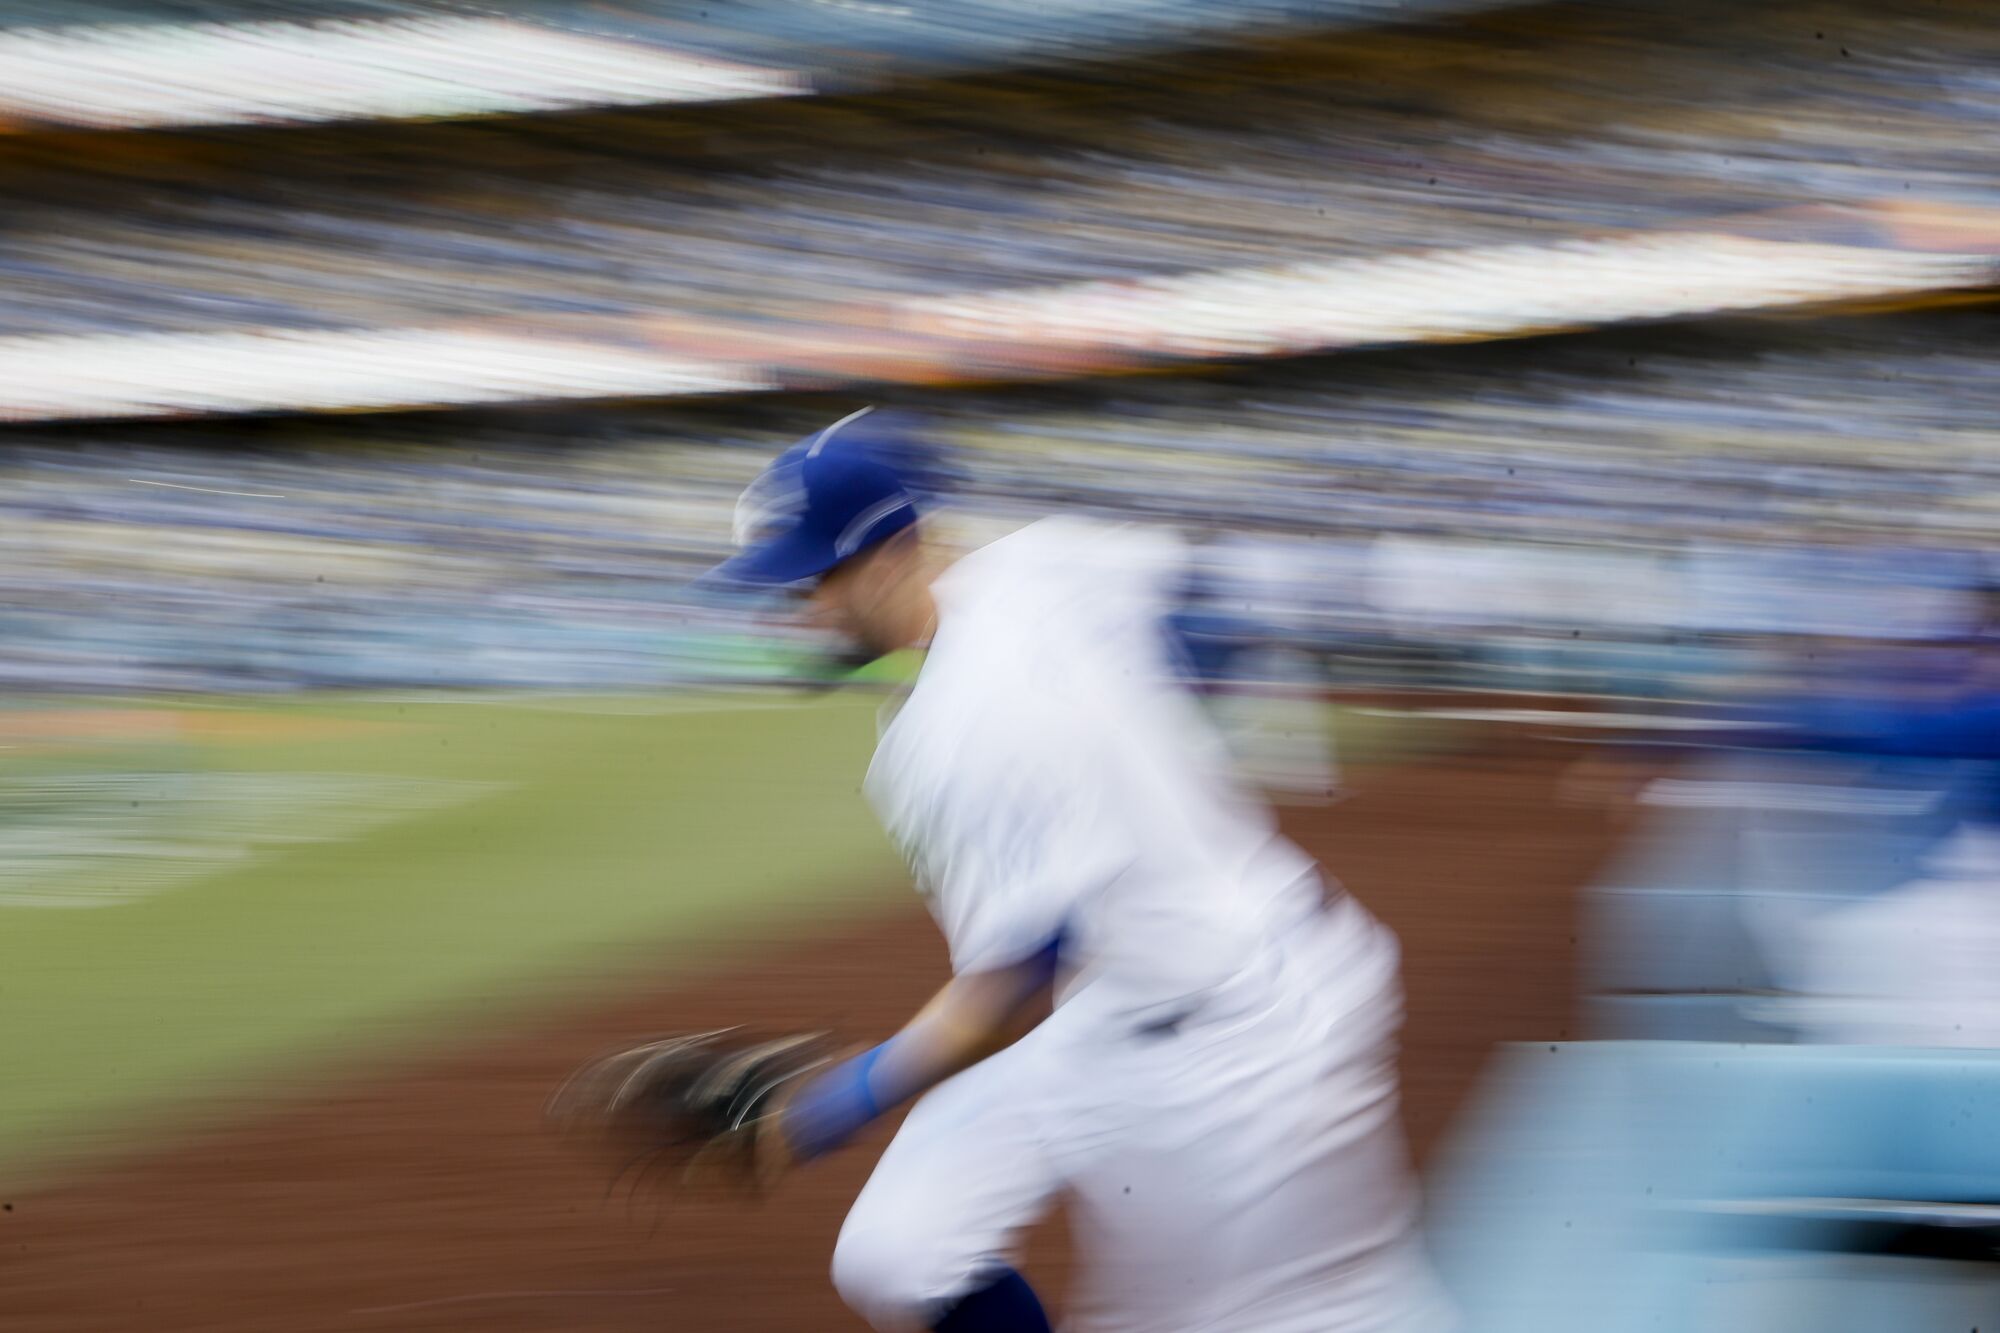 Dodgers' AJ Pollock takes the field